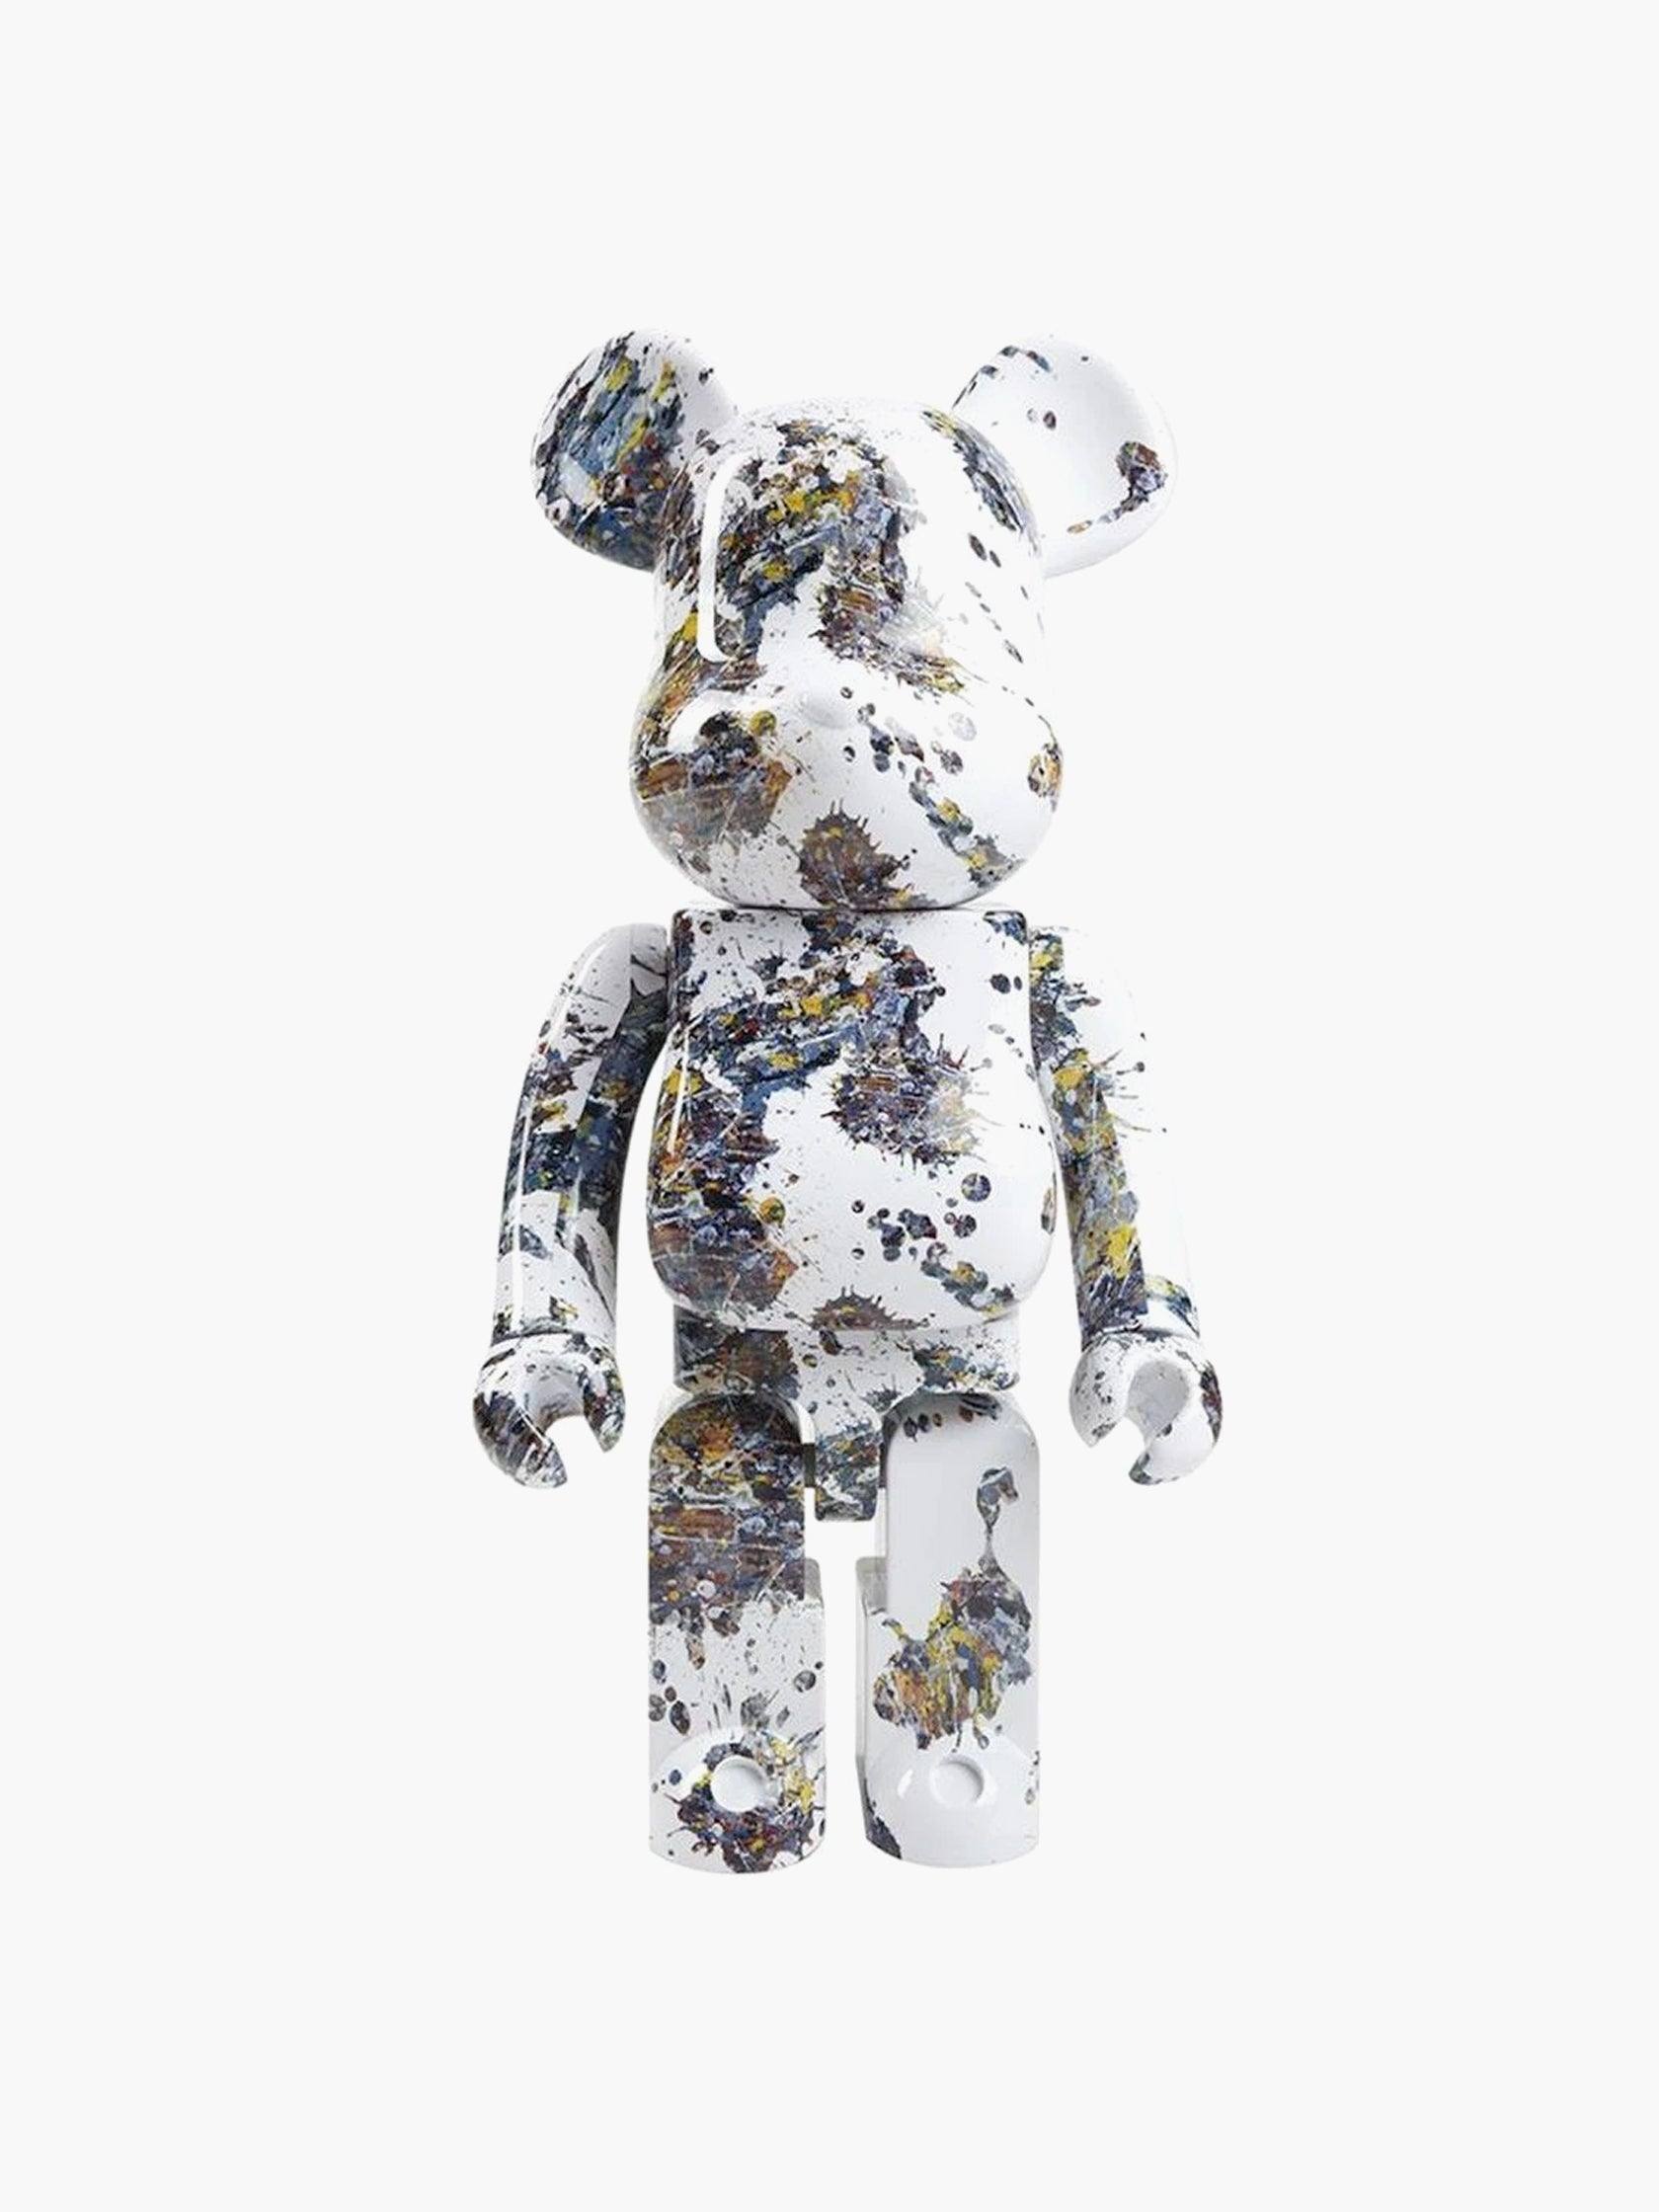 BE@RBRICK Jackson Pollock Studio Splash 1000% by Medicom Toy - Mankovsky Gallery